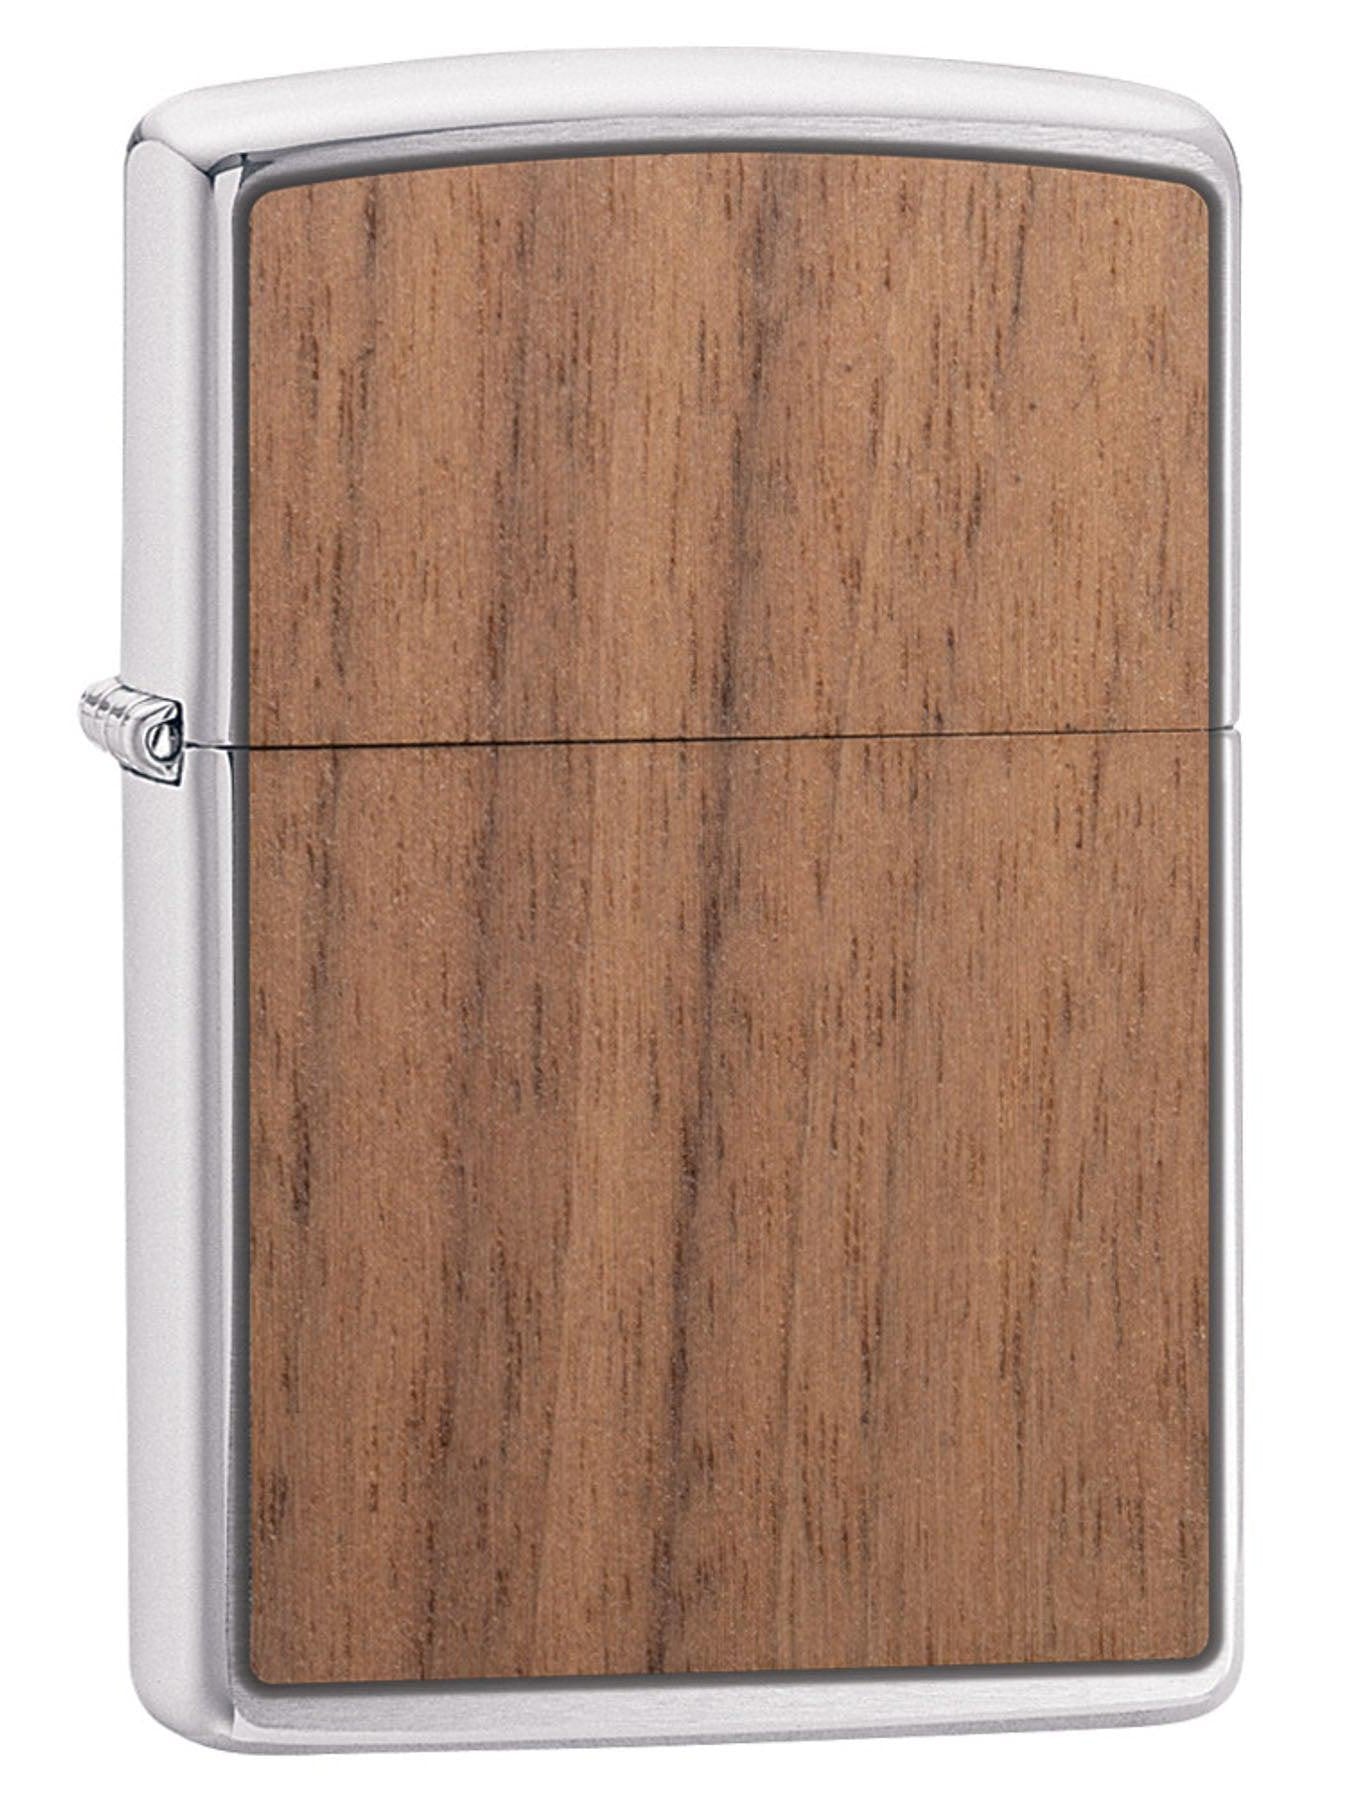 Zippo Lighter: Woodchuck Walnut - Brushed Chrome 49039 (4555554750557)